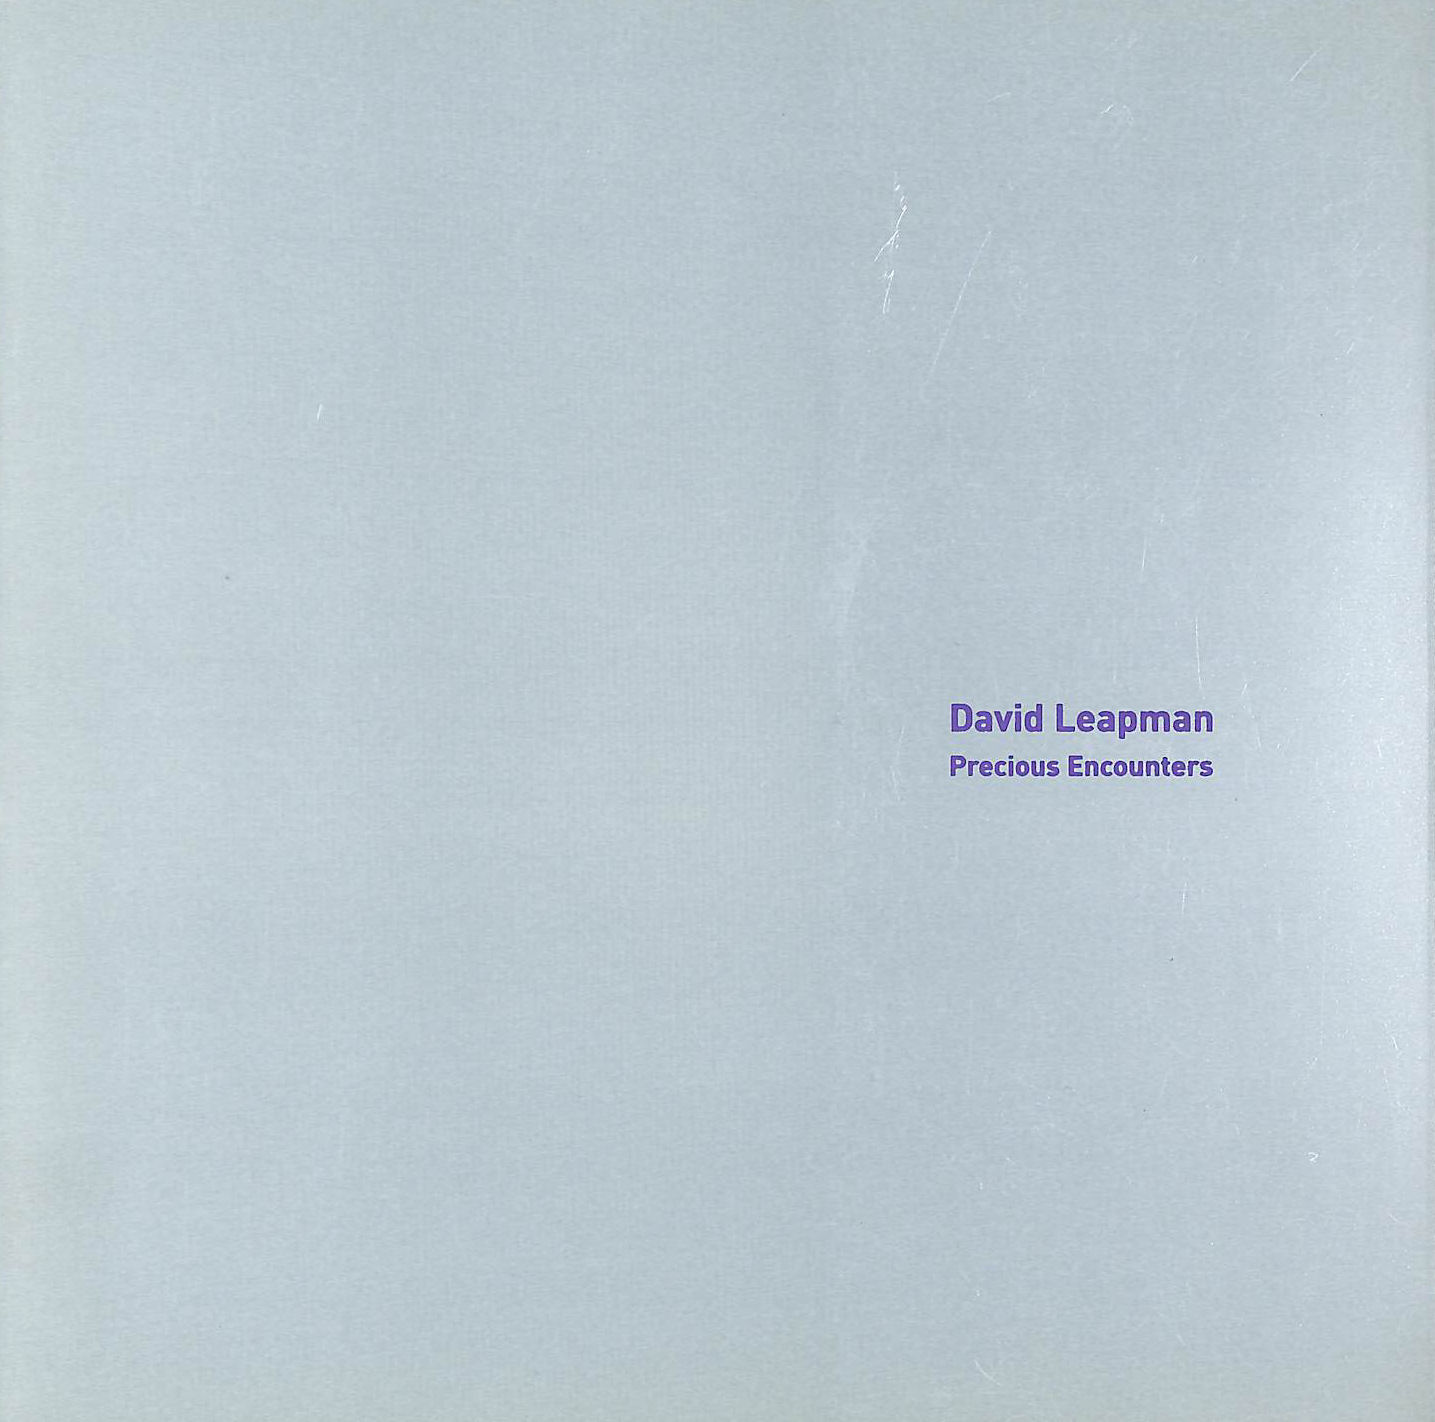 DAVID LEAPMAN, MARTIN GAYFORD (ESSAY) - David Leapman, Previous Encounters